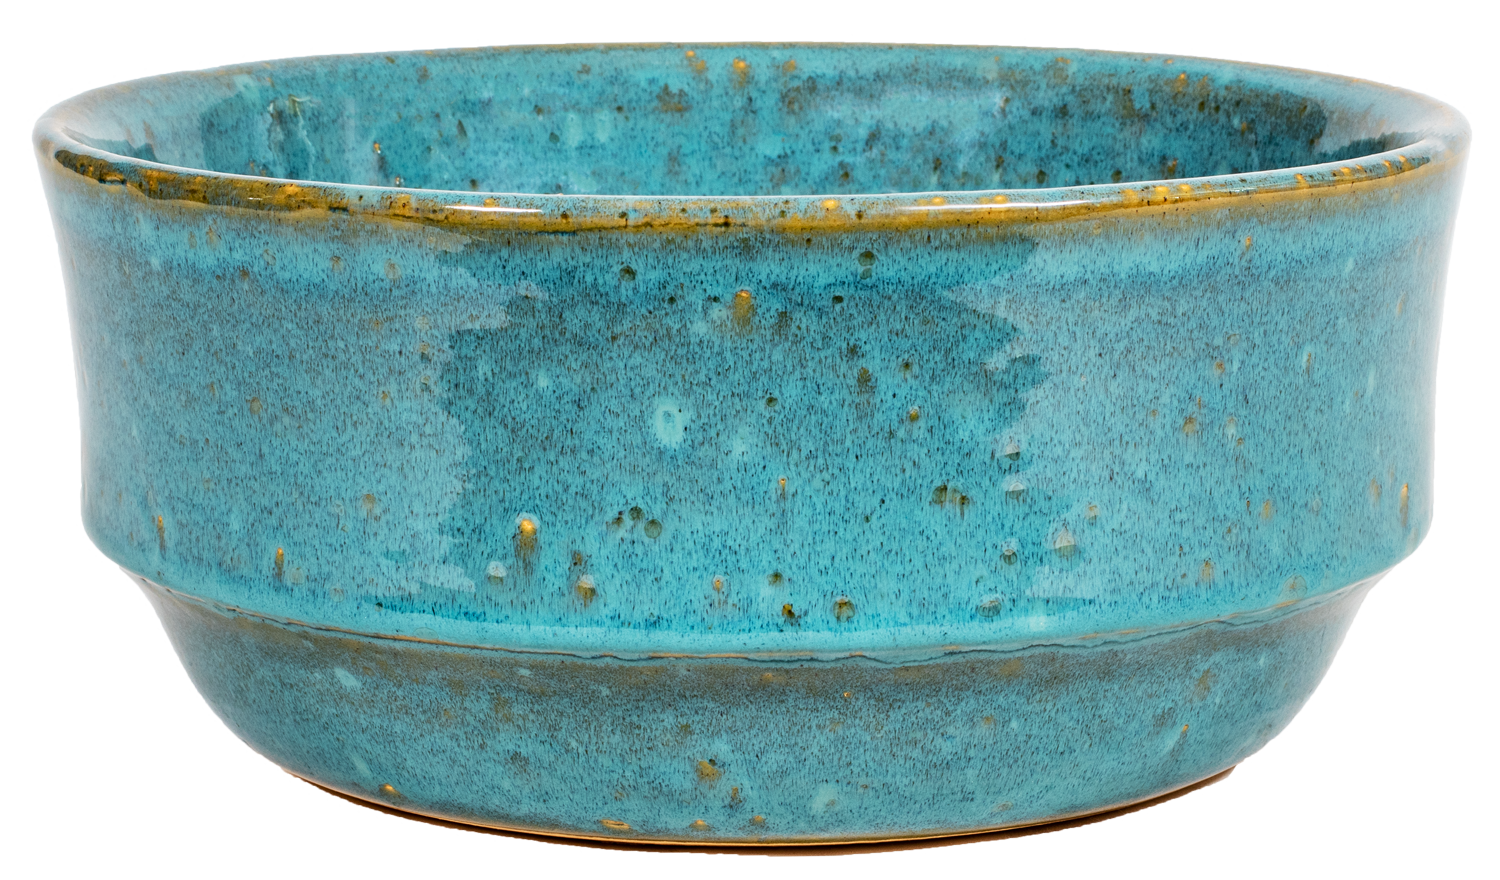 Large rounded bowl planter in turquoise glaze